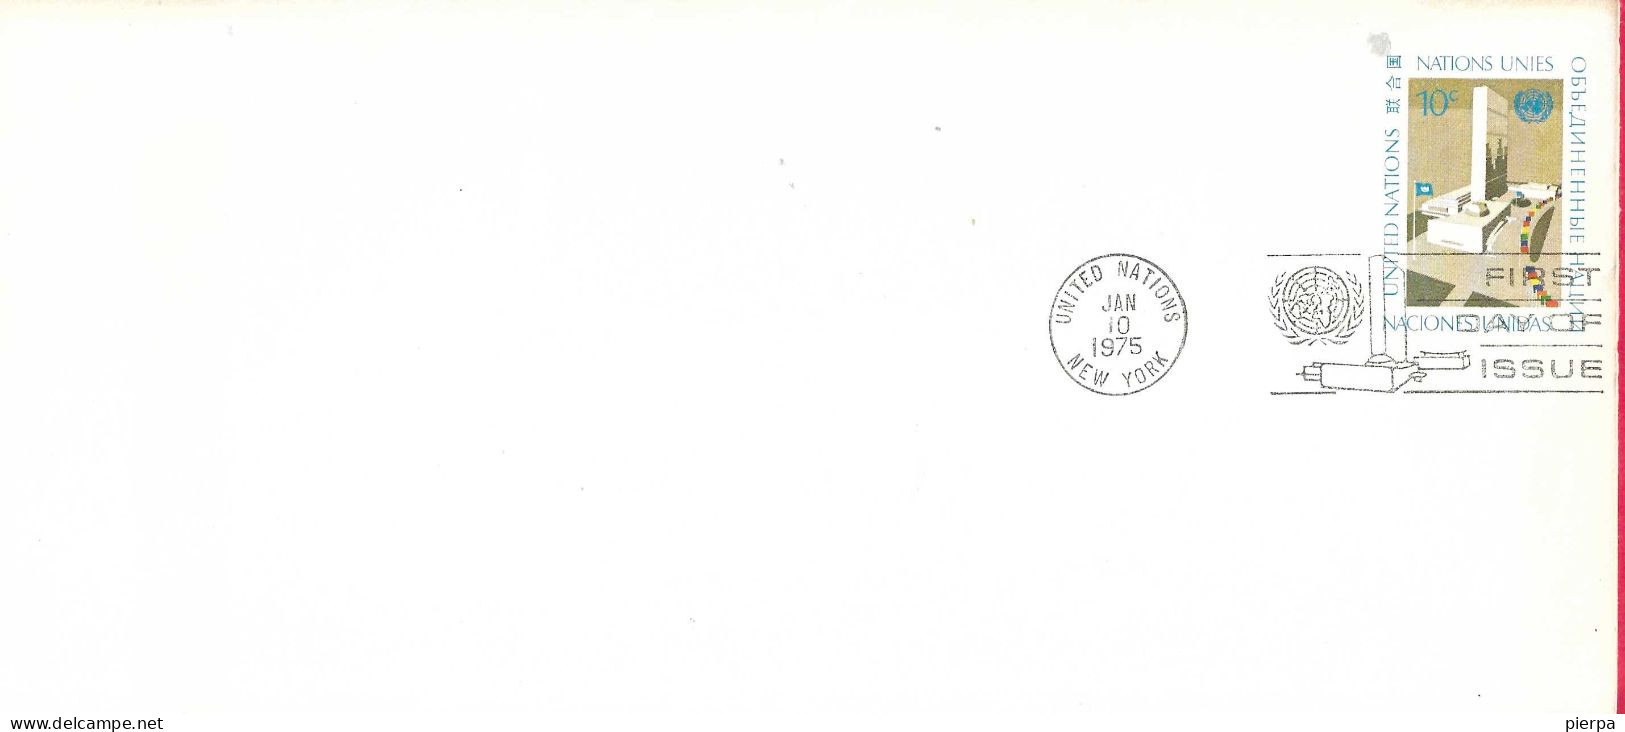 O.N.U. - 1975 - INTERO BUSTA POSTALE CENT. 10 - ANNULLO A TARGHETTA F.D.C*JAN 10, 1975*- FORMATO COMMERCIALE - Covers & Documents